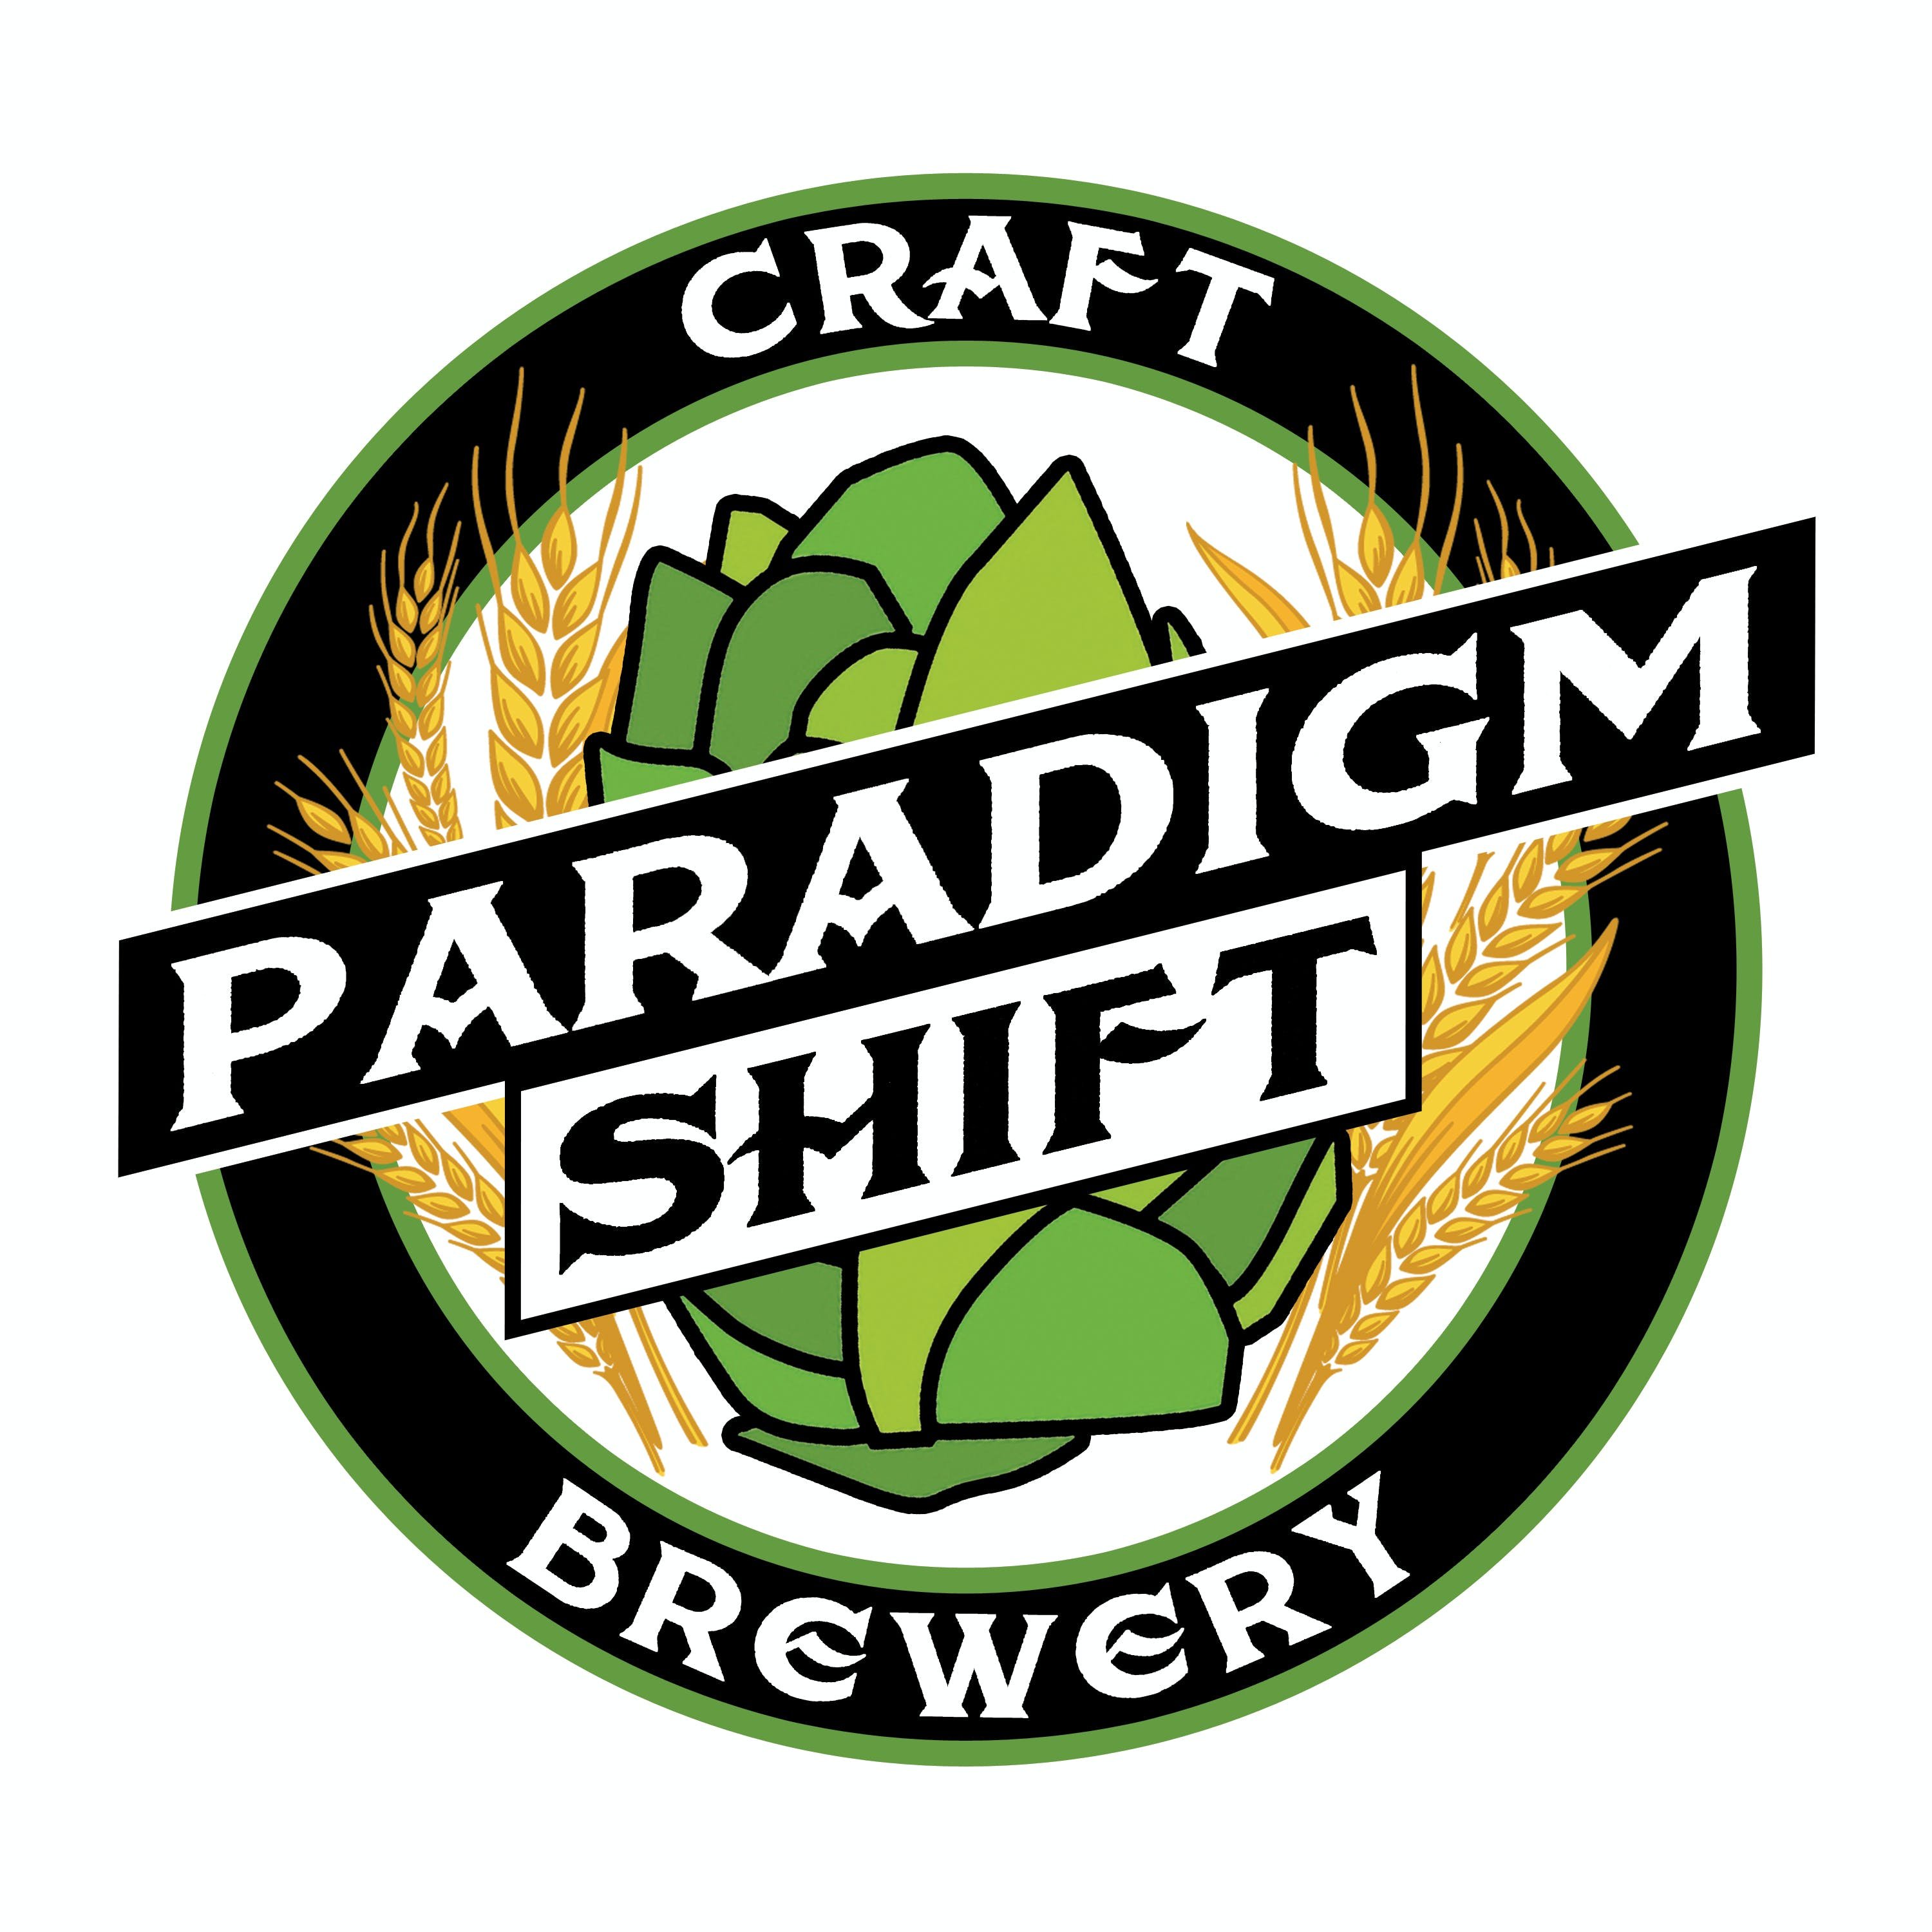 Paradigm Shift Brewery